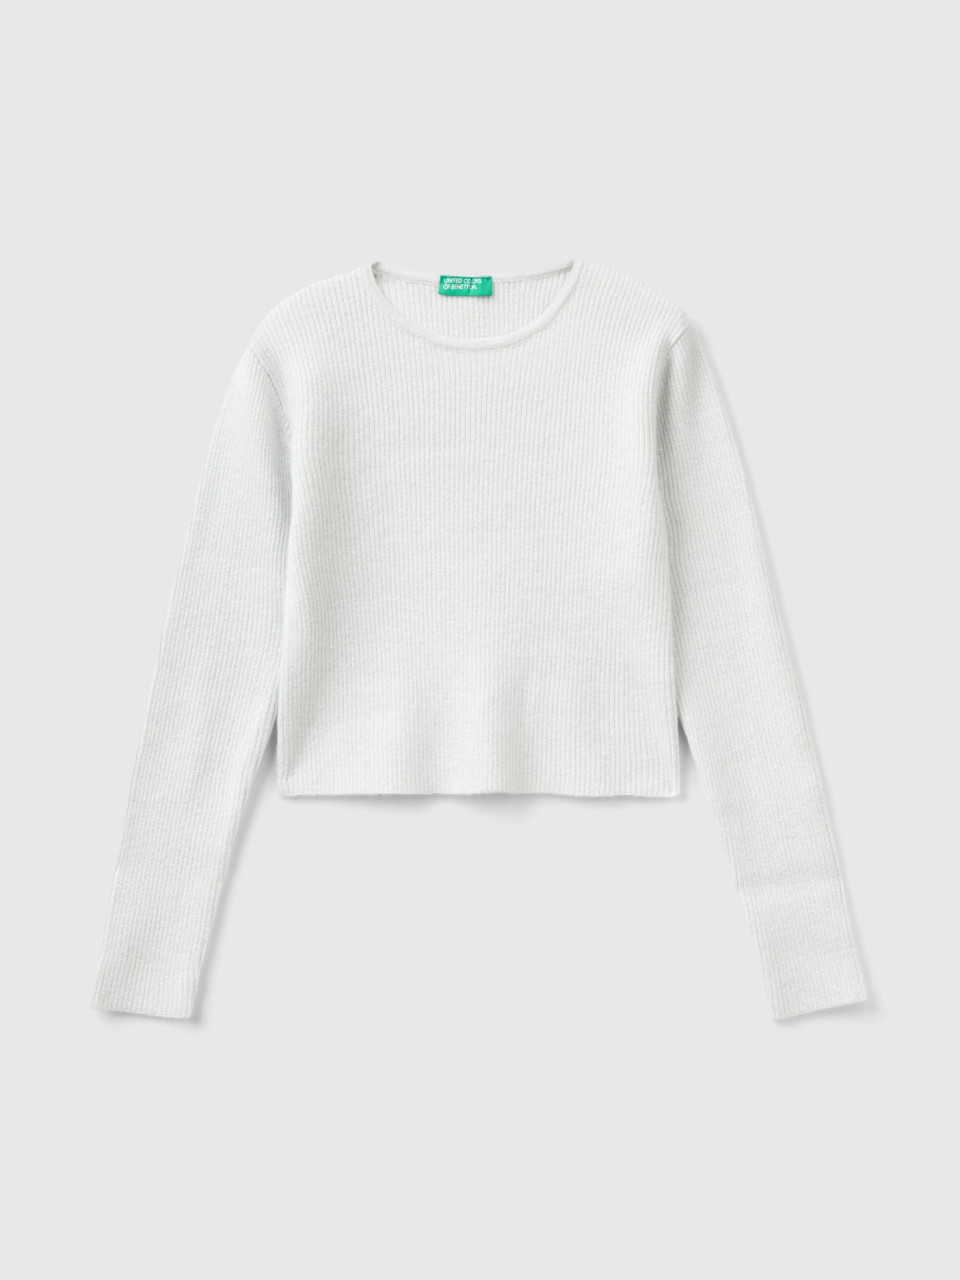 Benetton, Sweater With Lurex, White, Kids